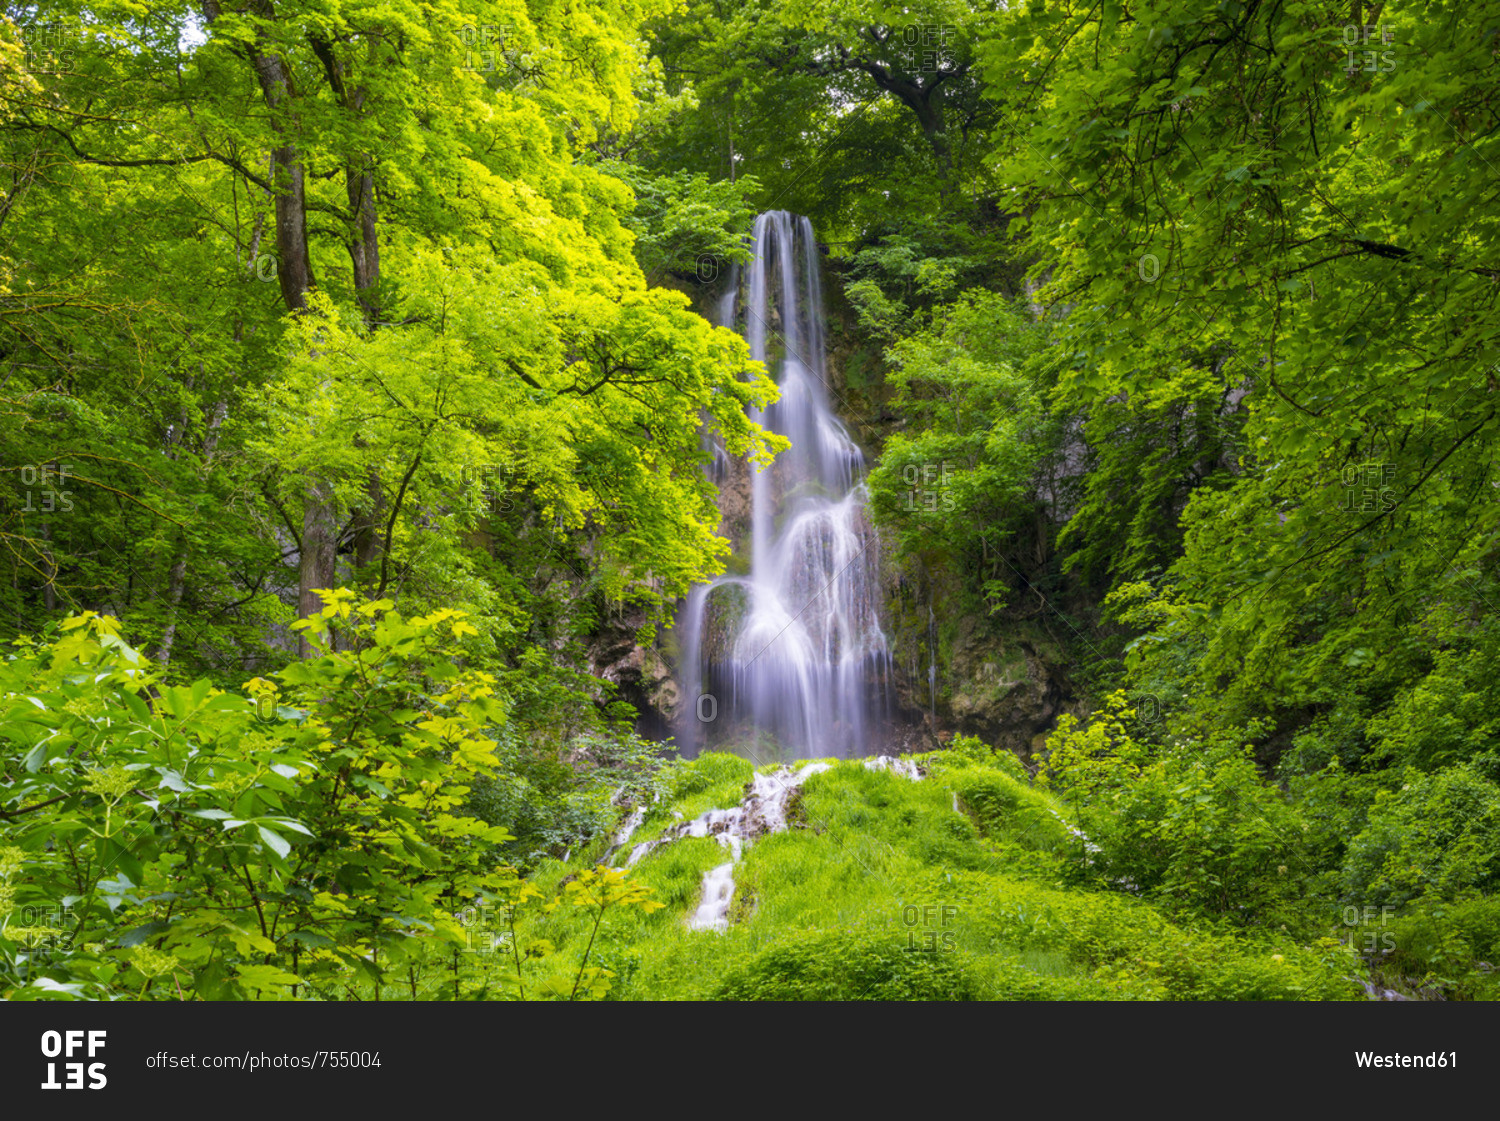 Germany- Bad Urach- Swabian Alb- Urach waterfall